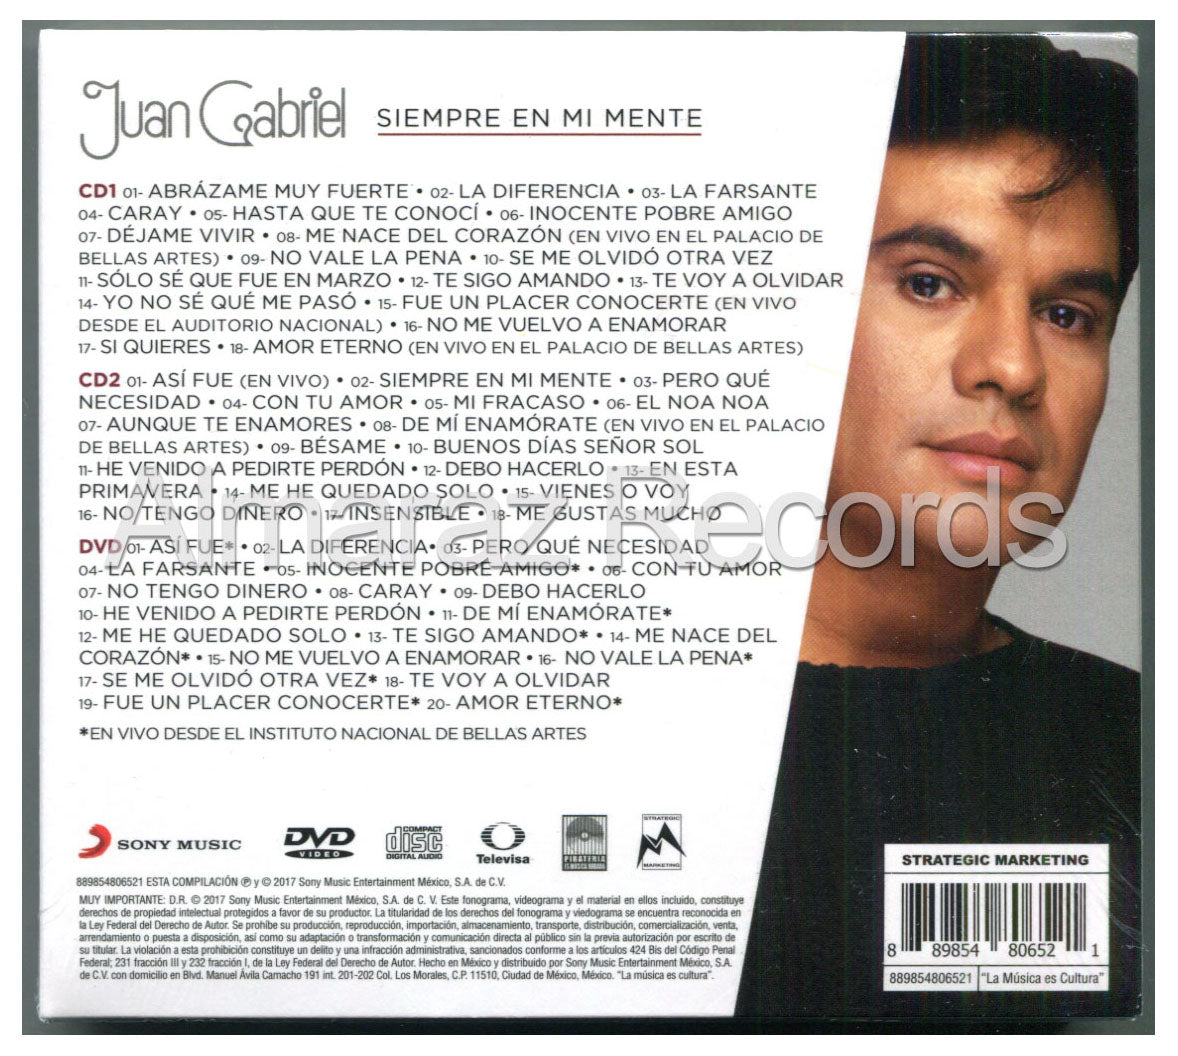 Juan Gabriel Siempre En Mi Mente 2CD+DVD